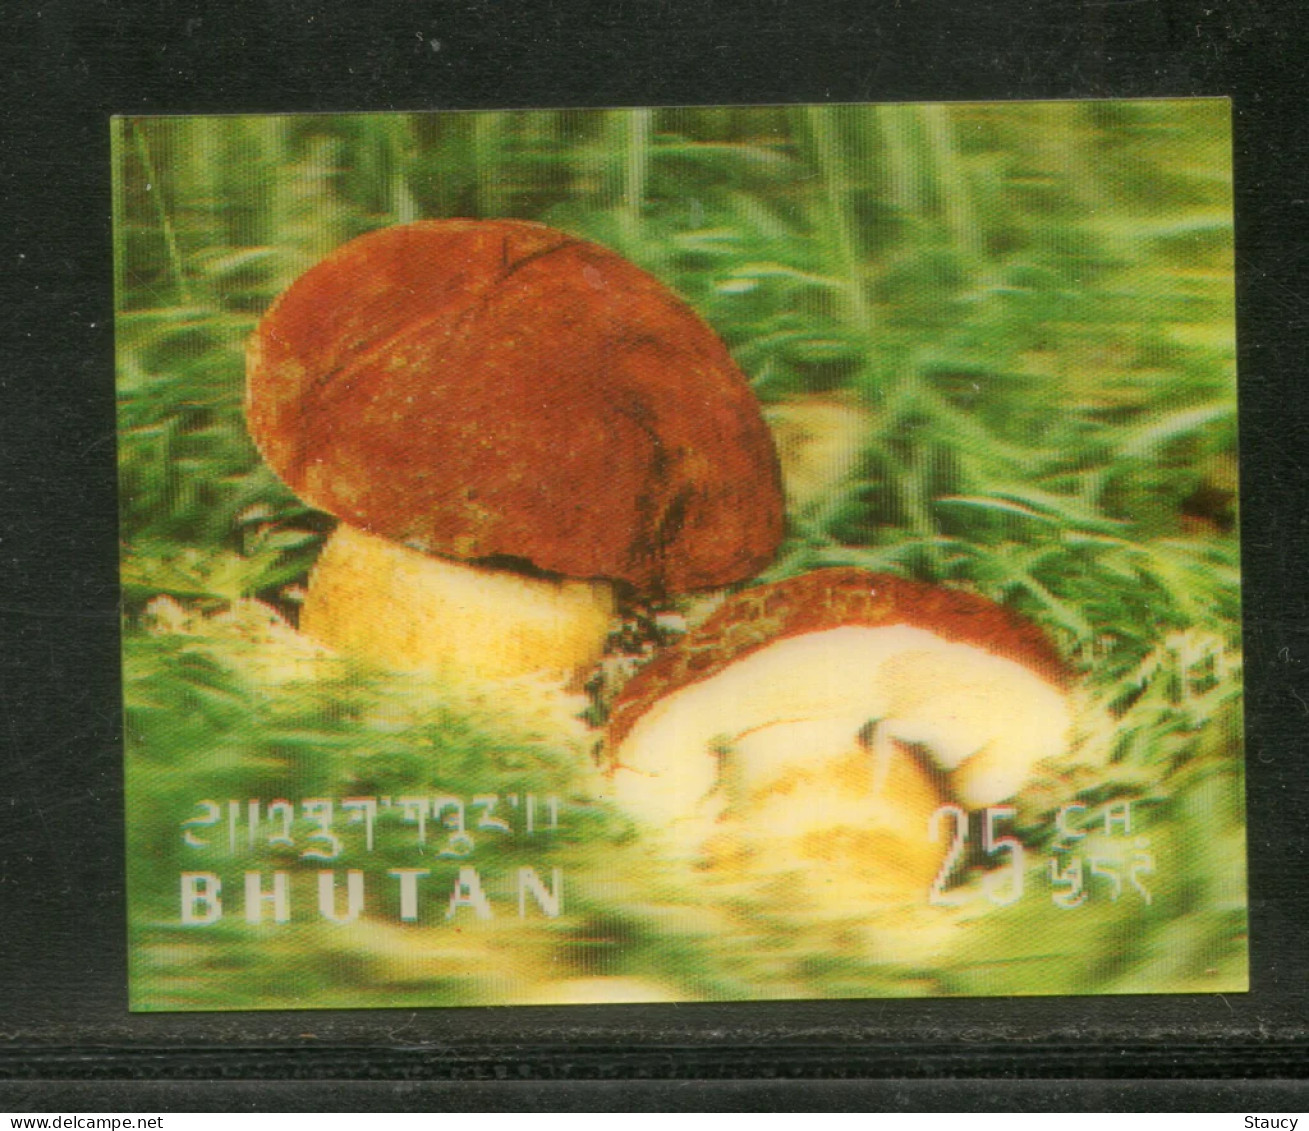 BHUTAN 1973 MUSHROOMS Plastic - 3-D Odd / Unusual / Unique Stamp MNH, As Per Scan - Oddities On Stamps